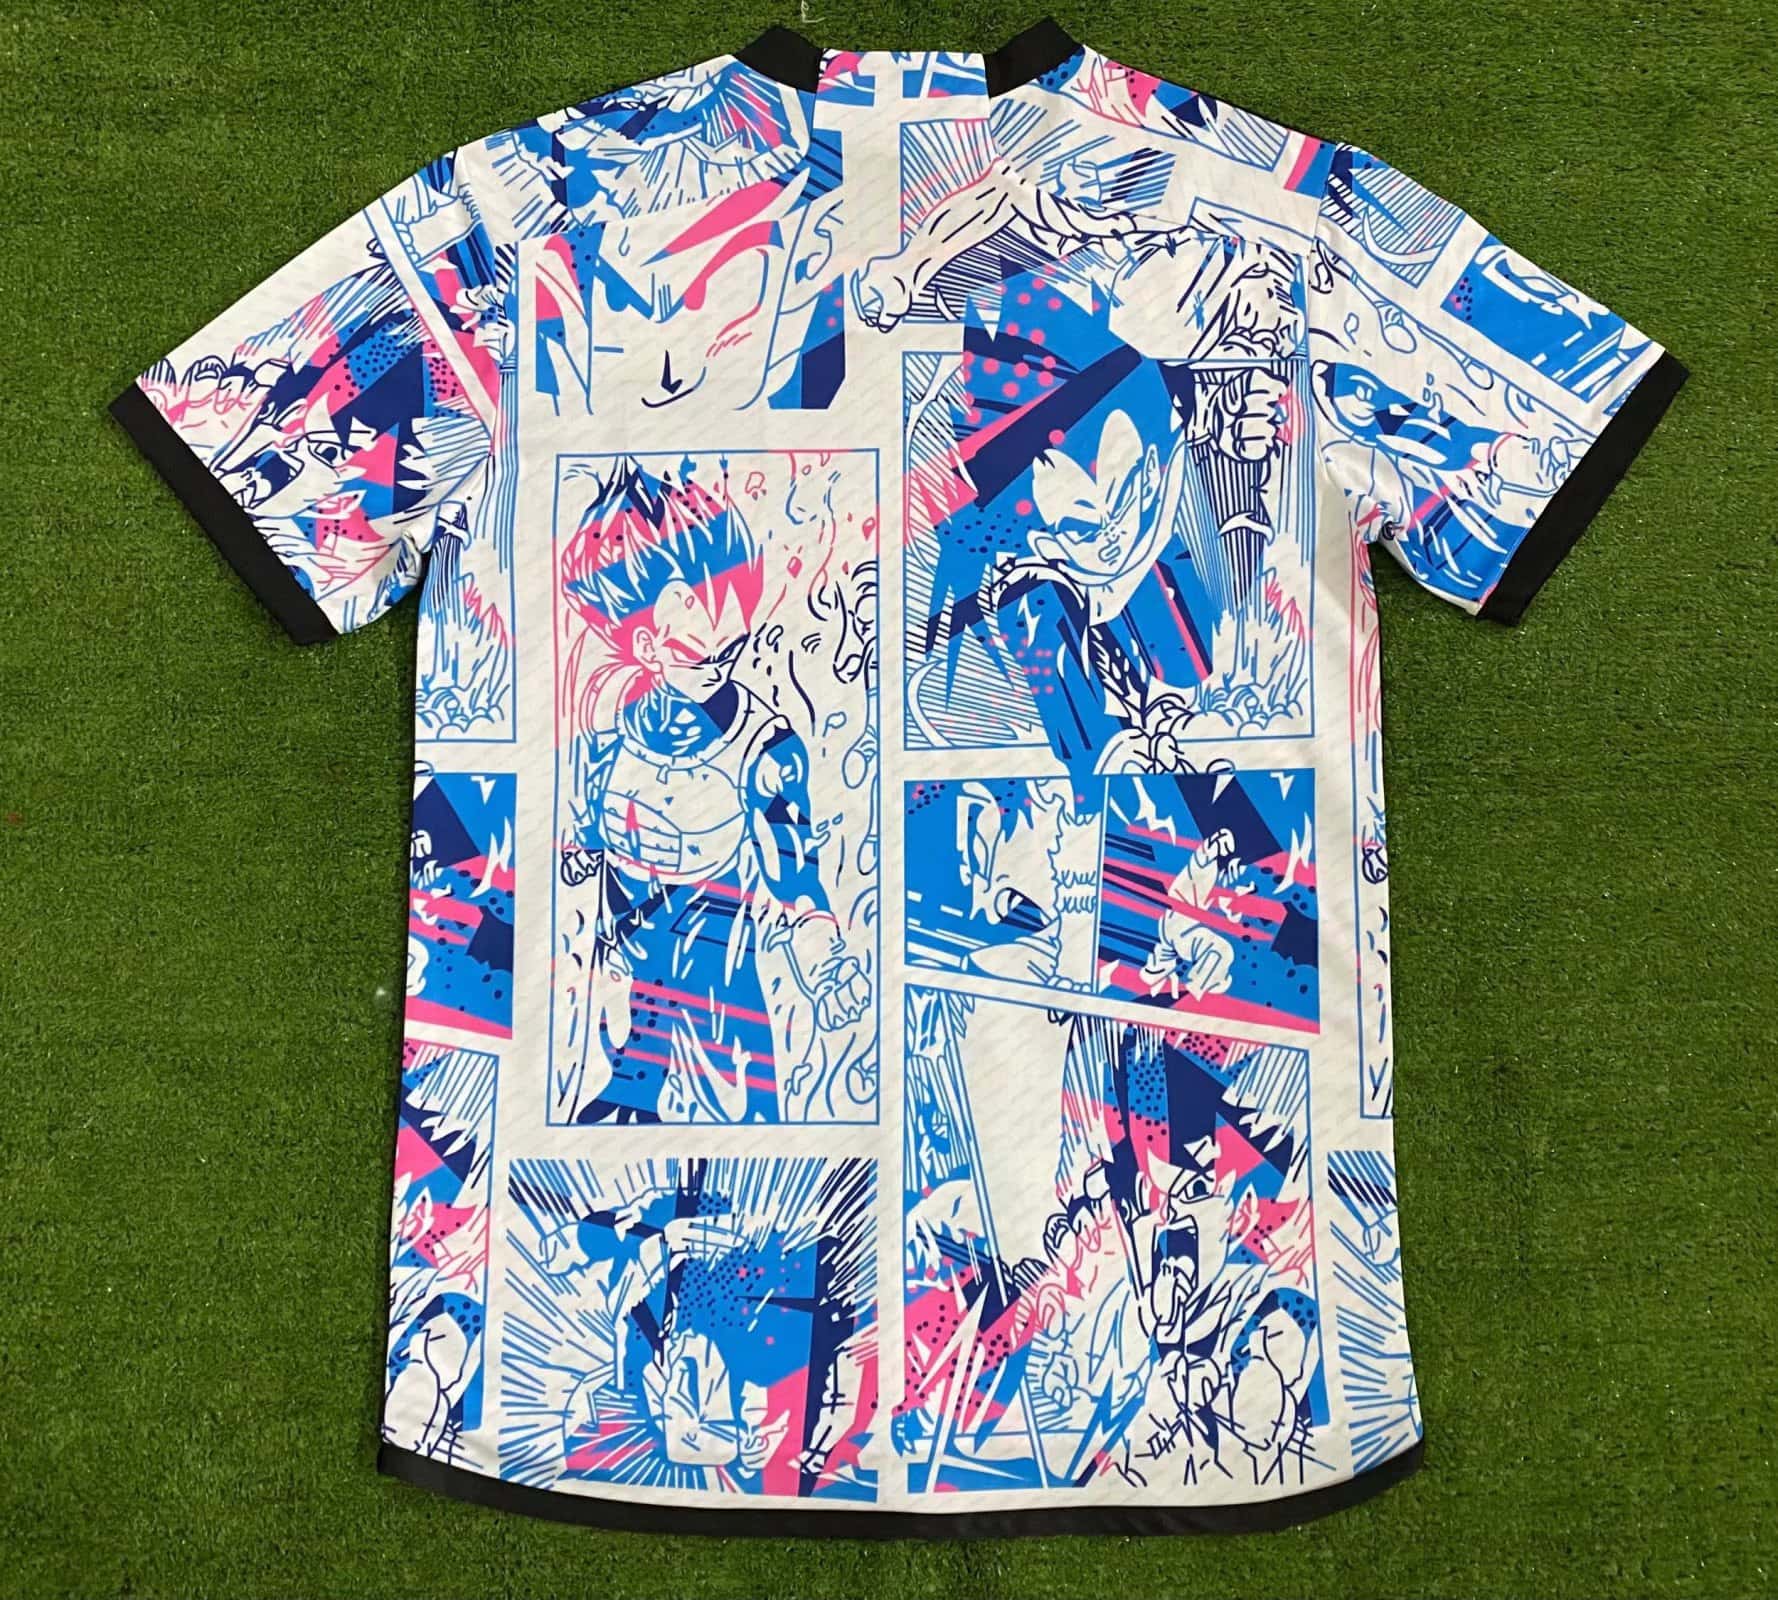 Japan Jerseys, Japan National Team Gear, 22/23 Kits & Apparel | Fanatics